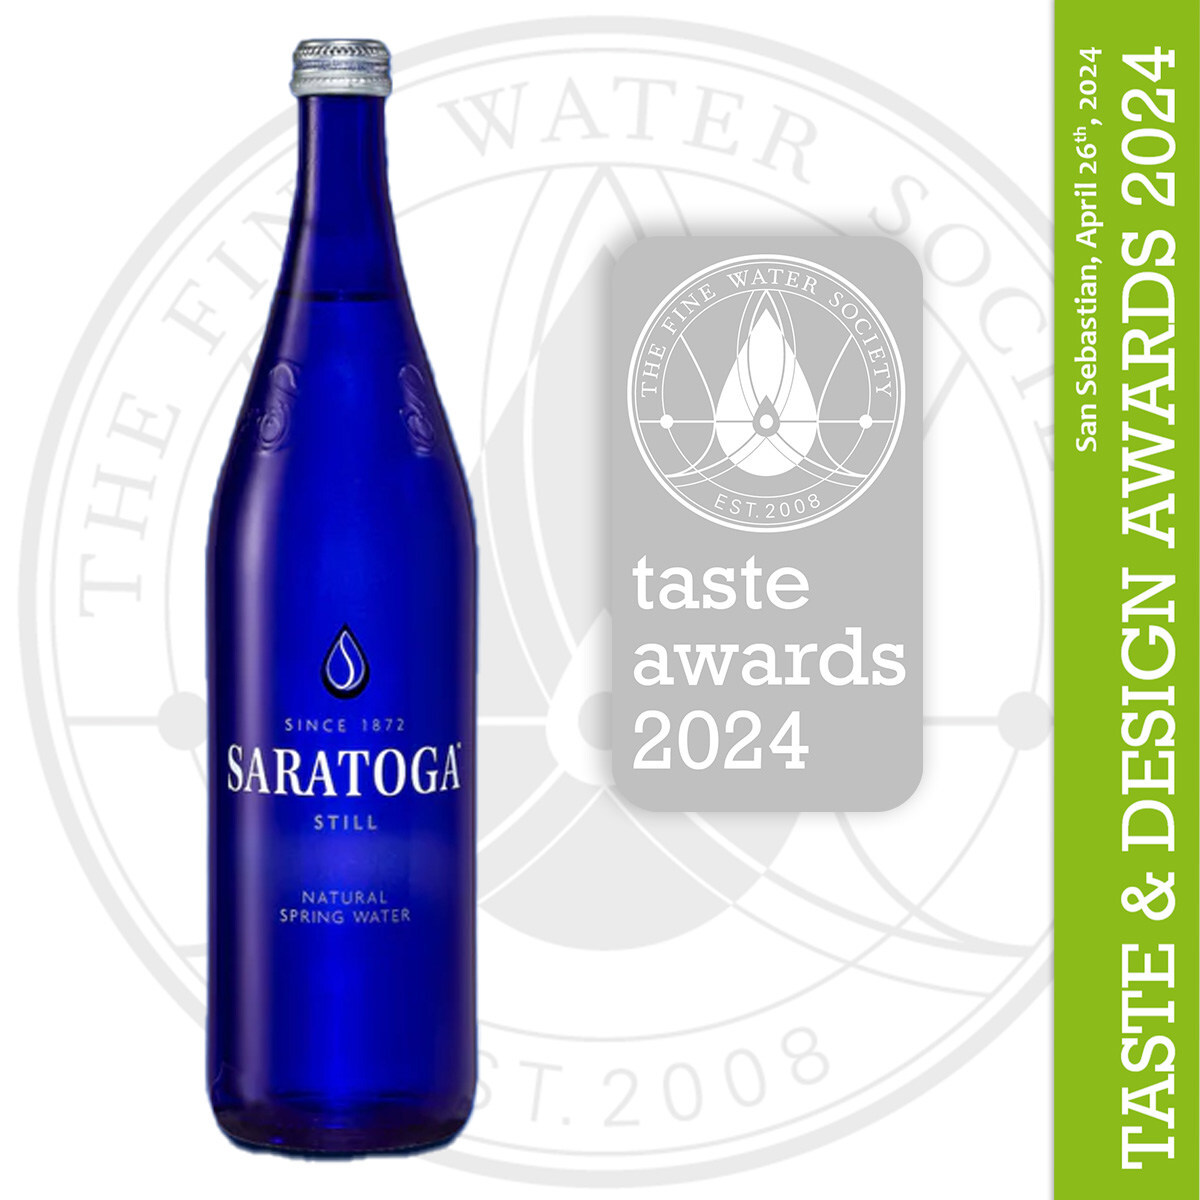 Saratoga® Spring Water Wins Taste Awards at International FineWatersTM Taste and Design Awards